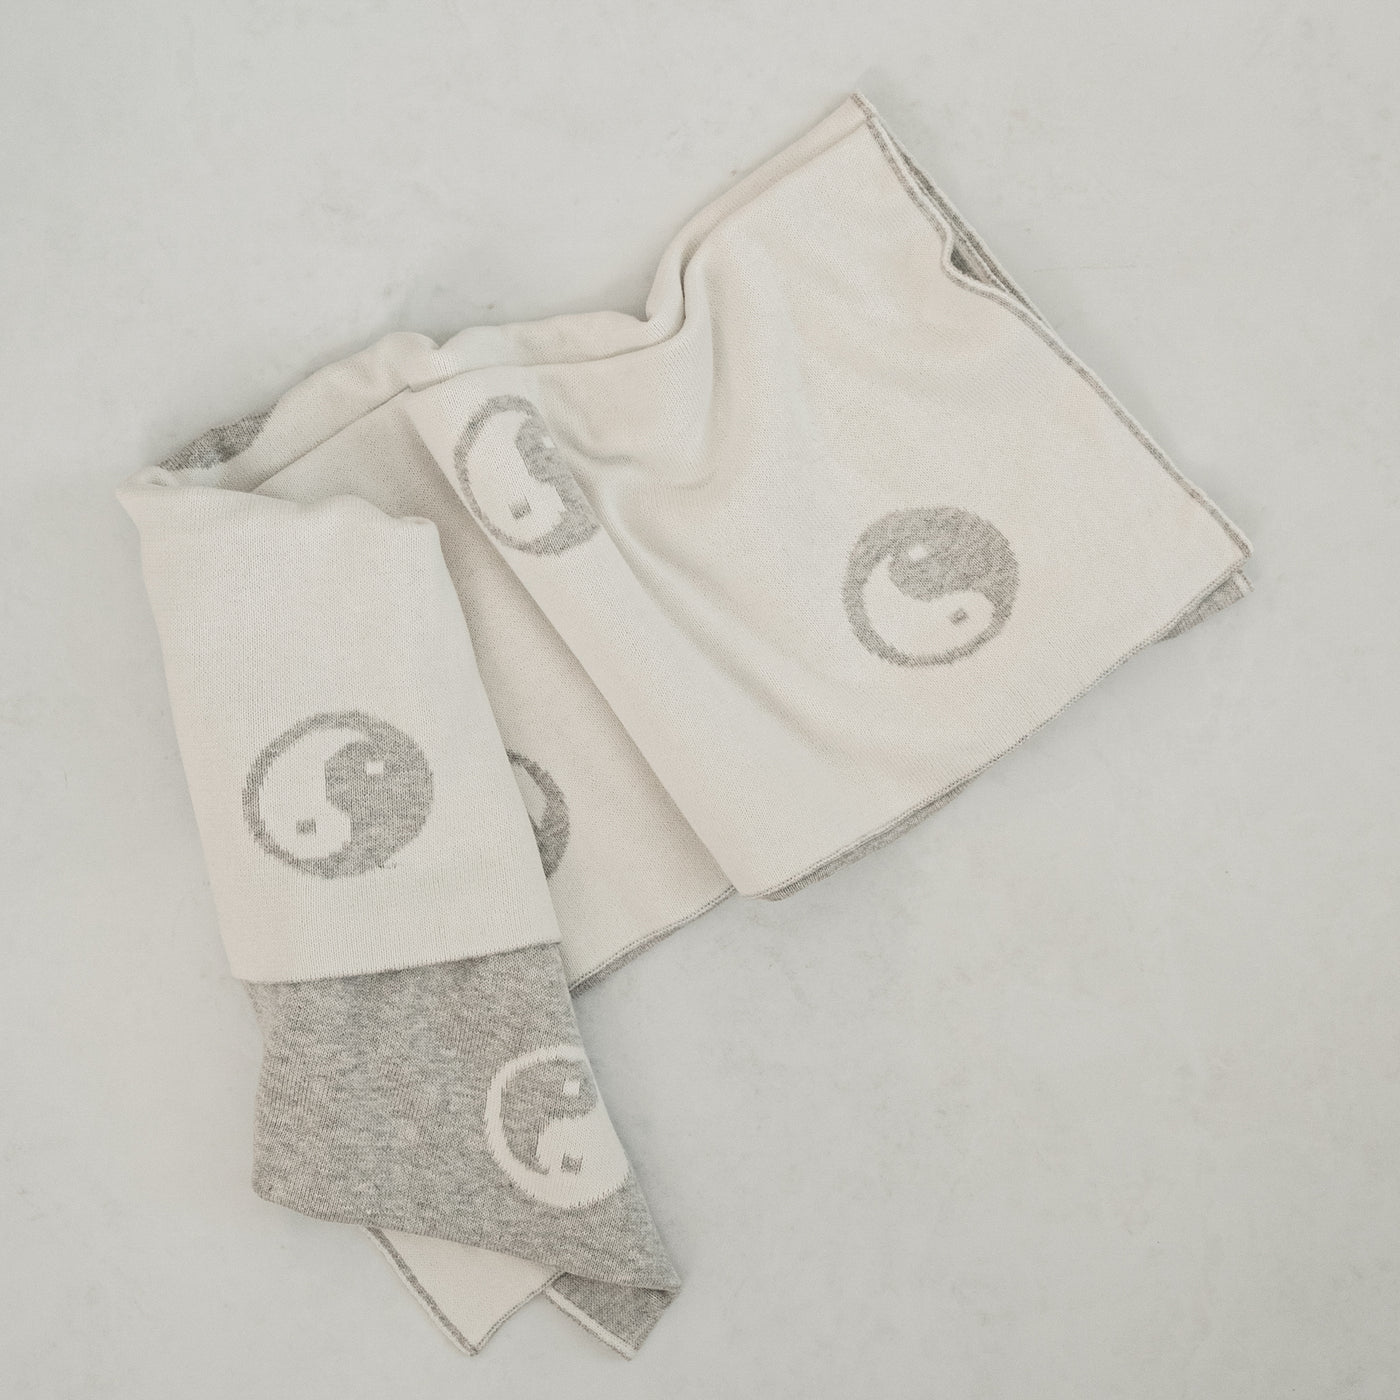 Yin Yang Knit Blanket